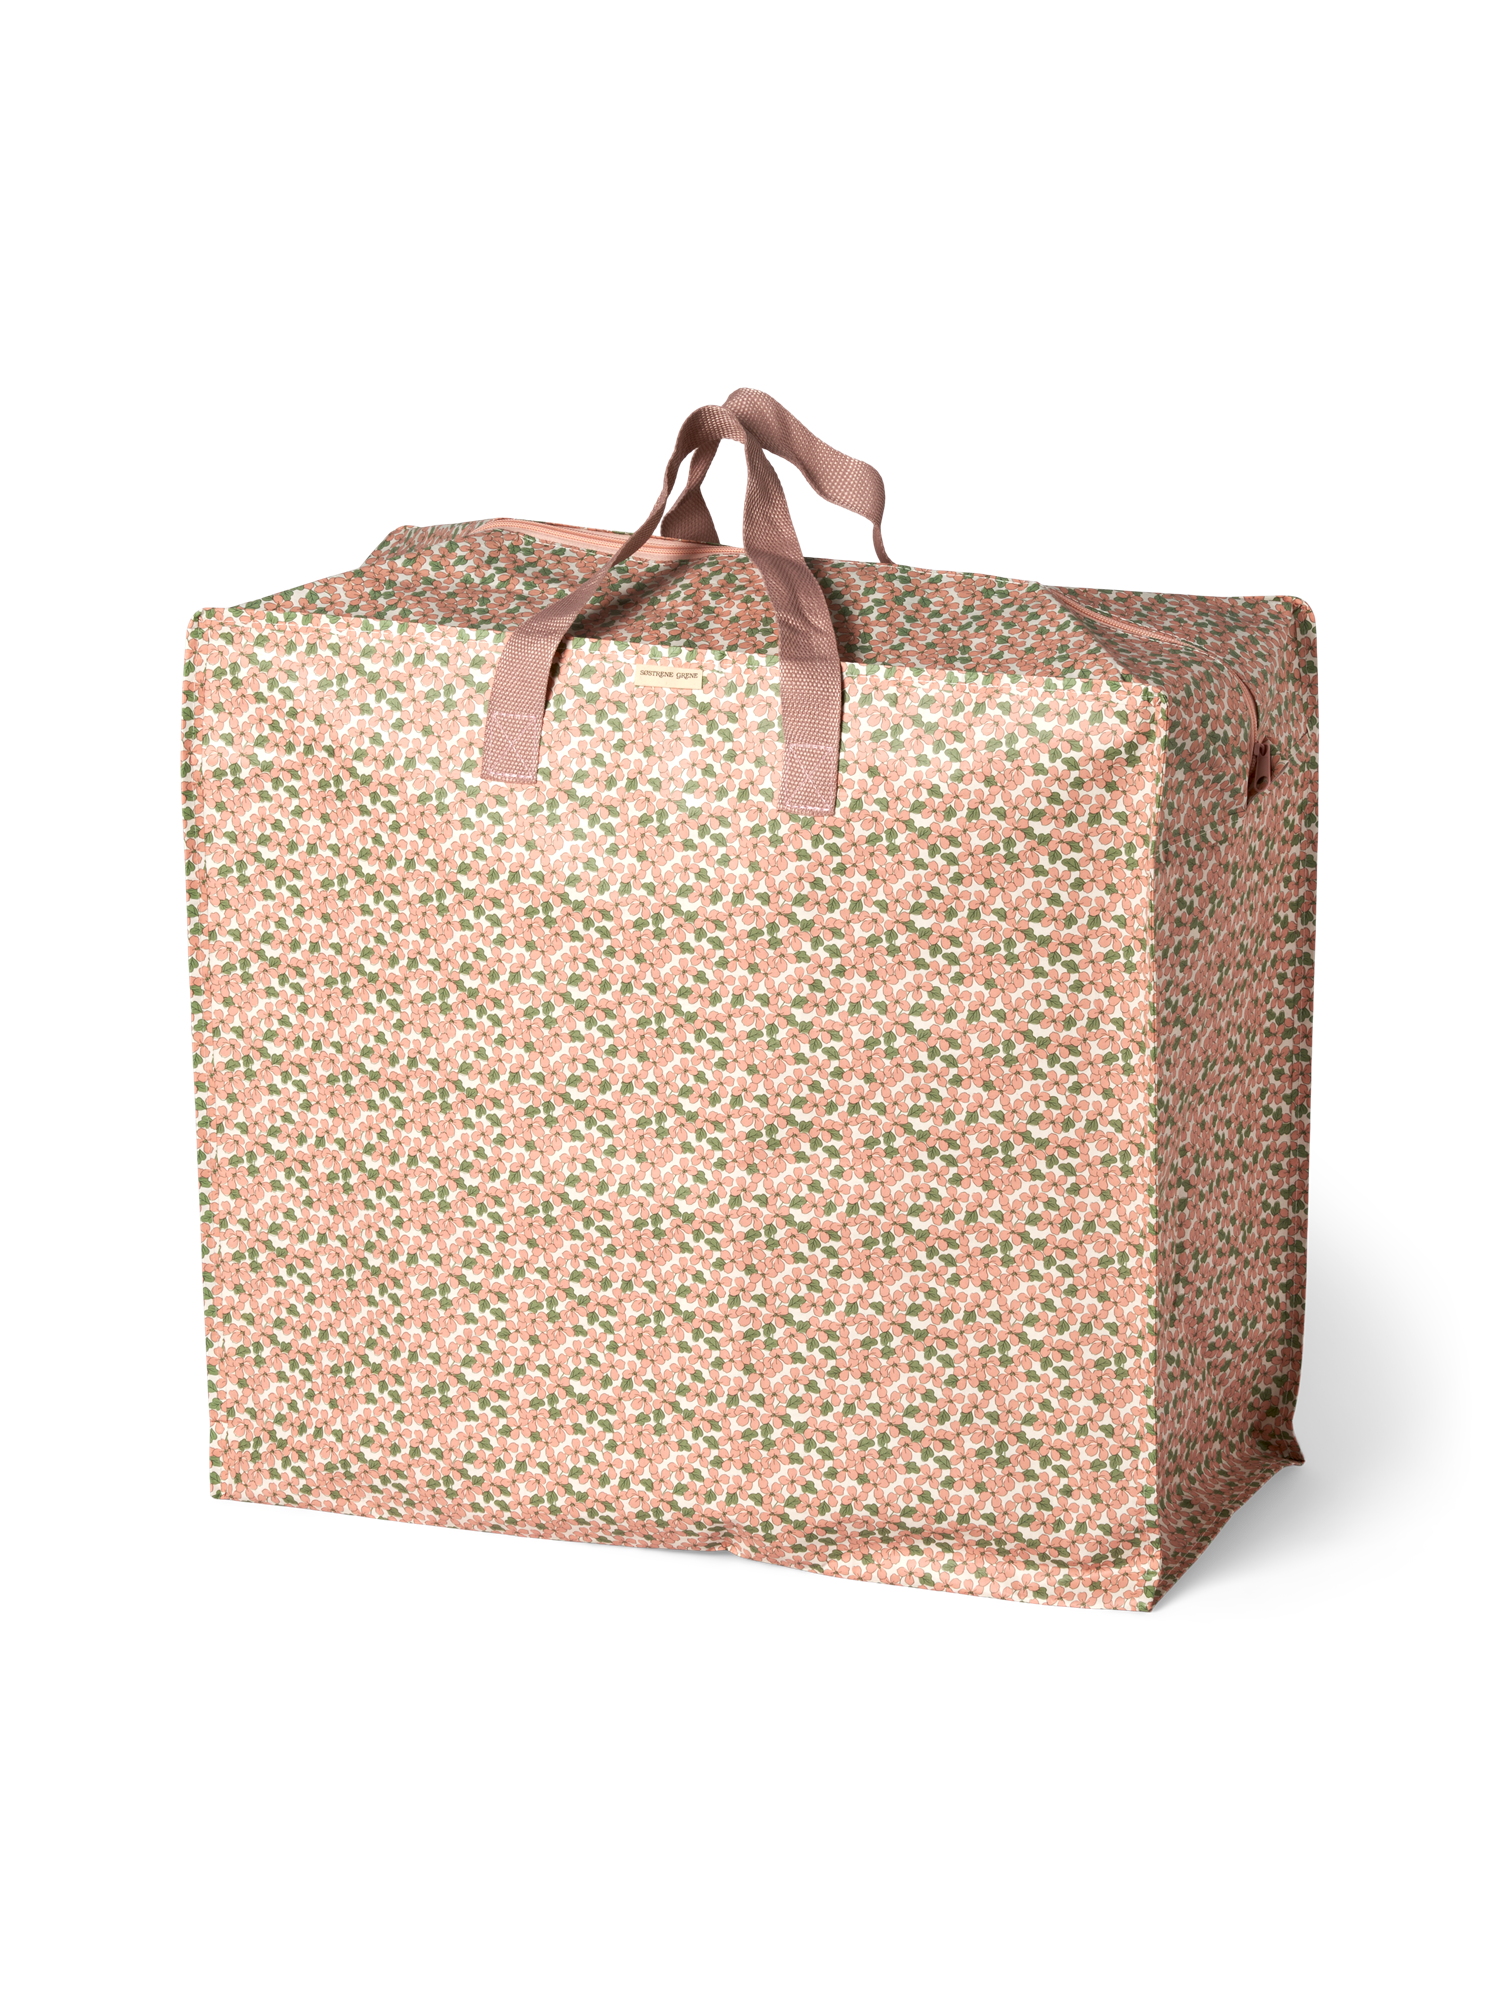 Shoppertaske med lynlås | Polypropylen/polyester. 53 x 47,5 cm. Søstrene Grene